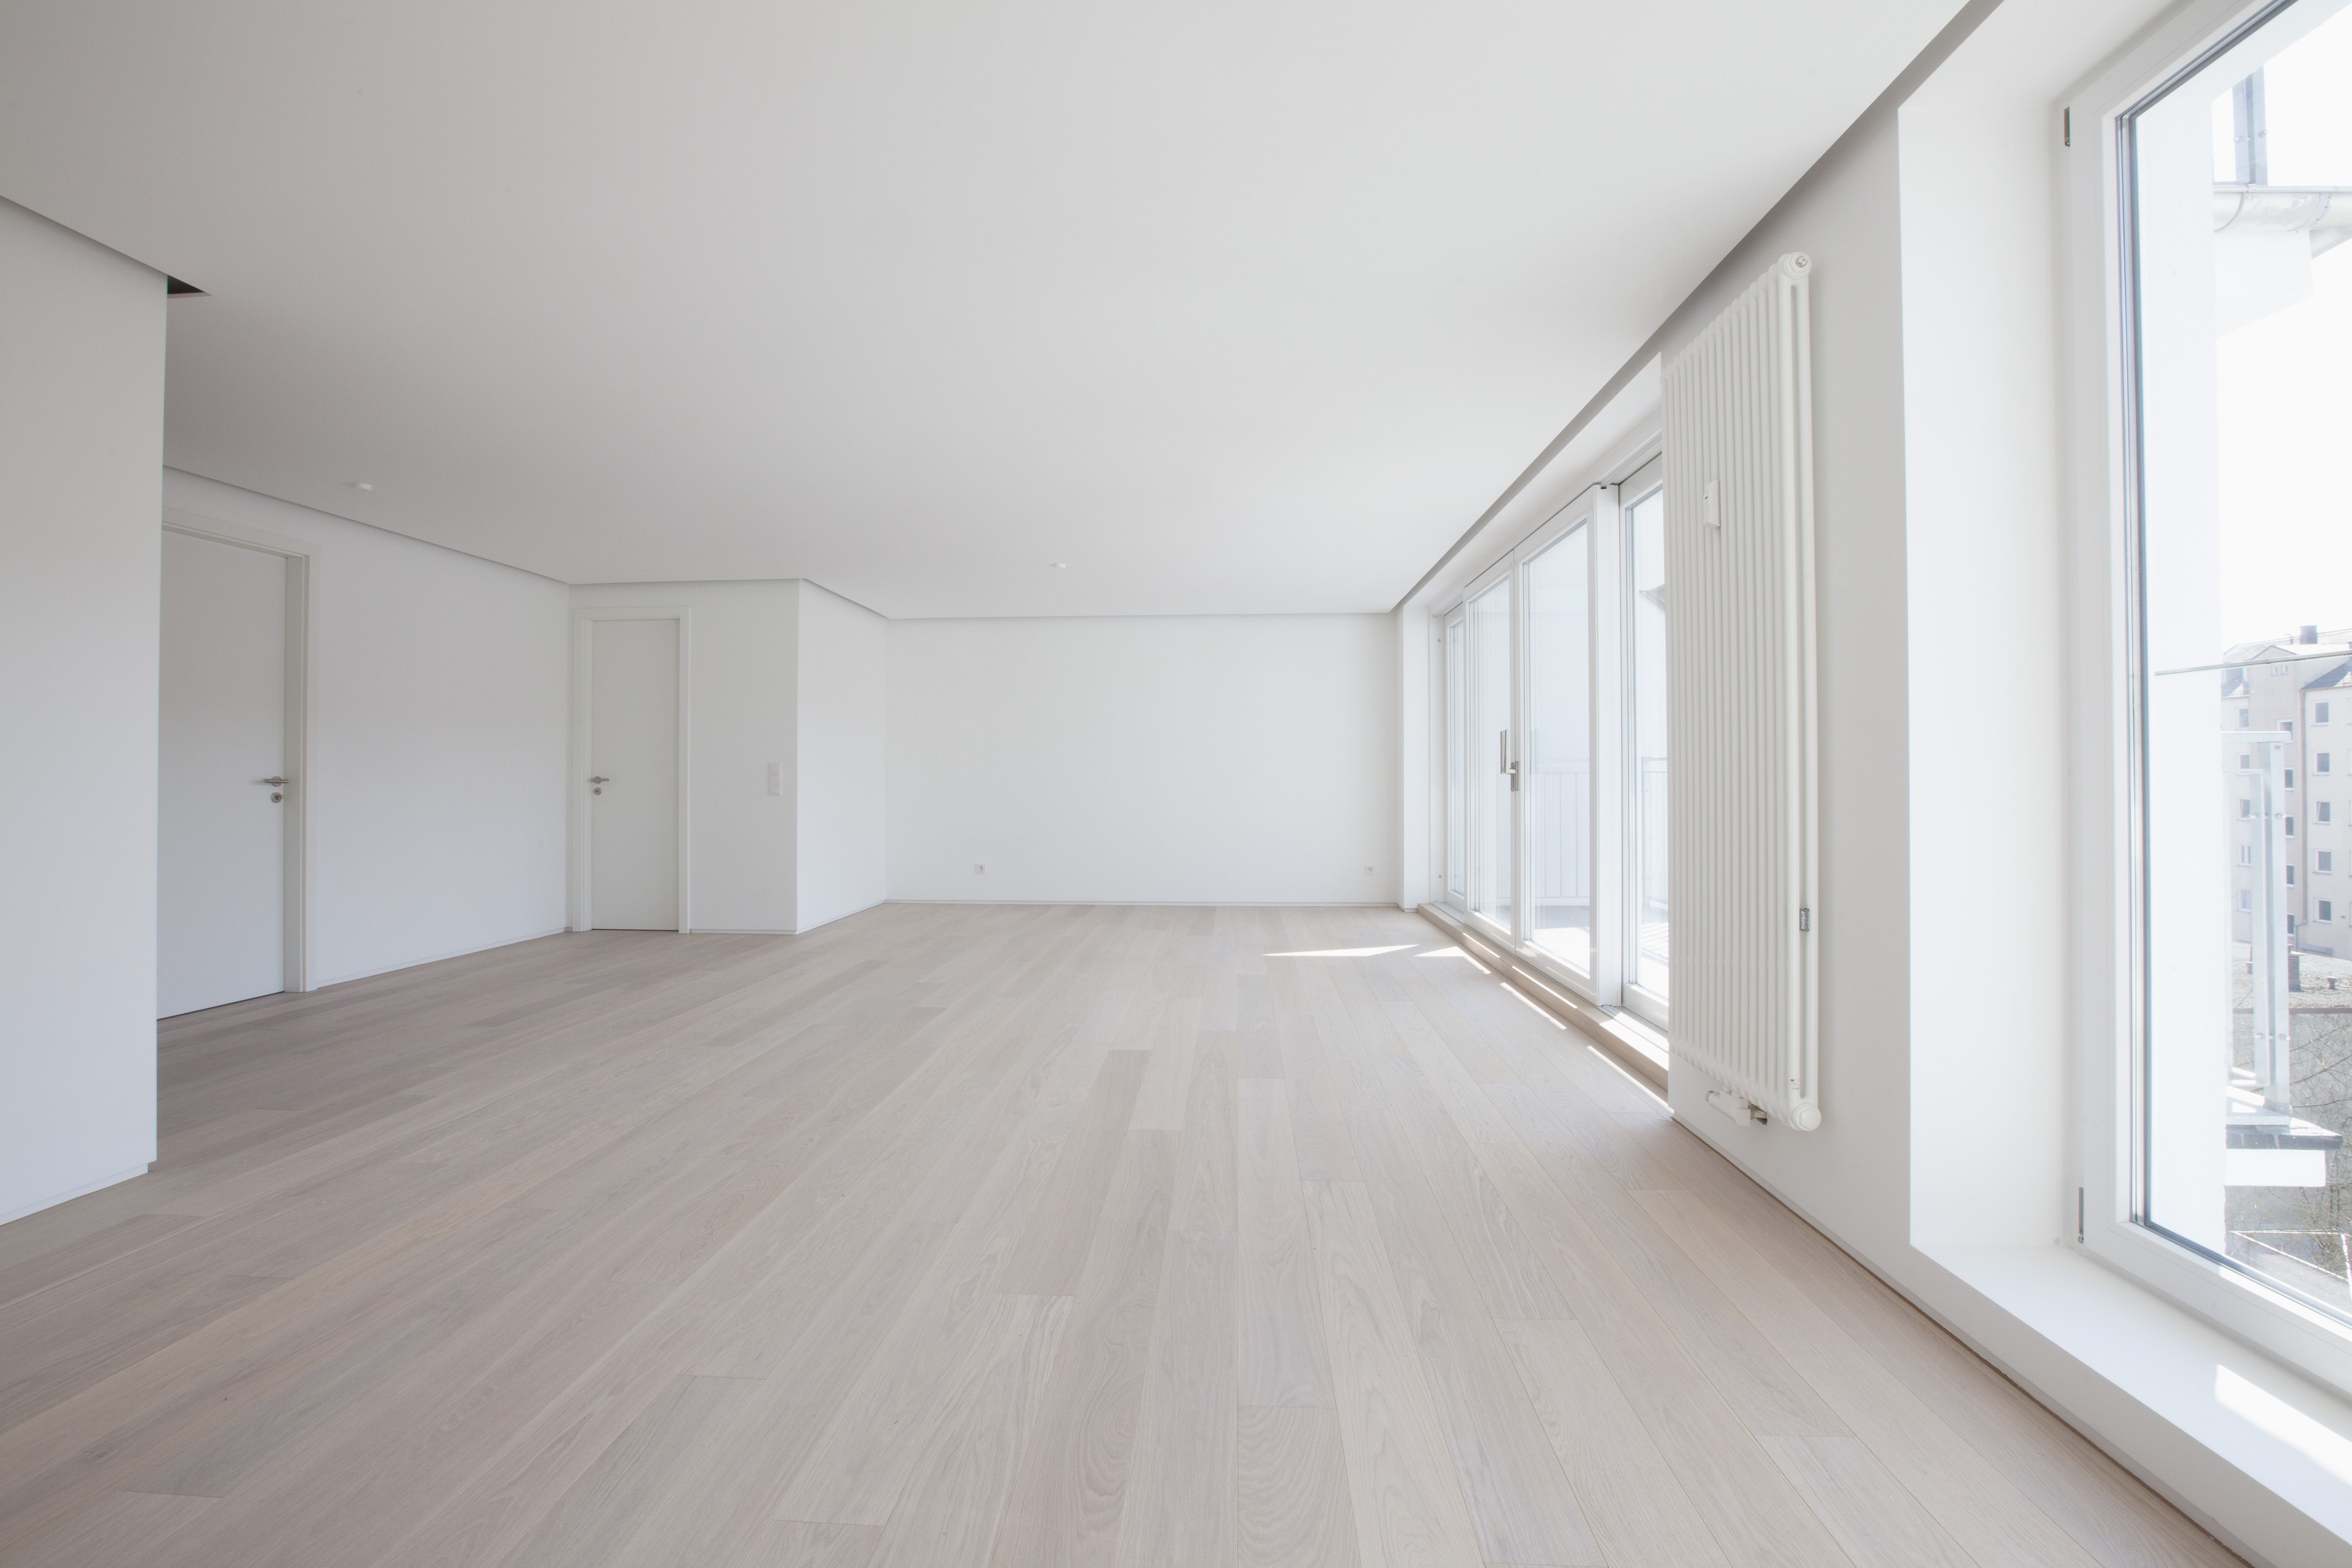 glue down solid hardwood floor of basics of favorite hybrid engineered wood floors inside empty living room in modern apartment 578189139 58866f903df78c2ccdecab05